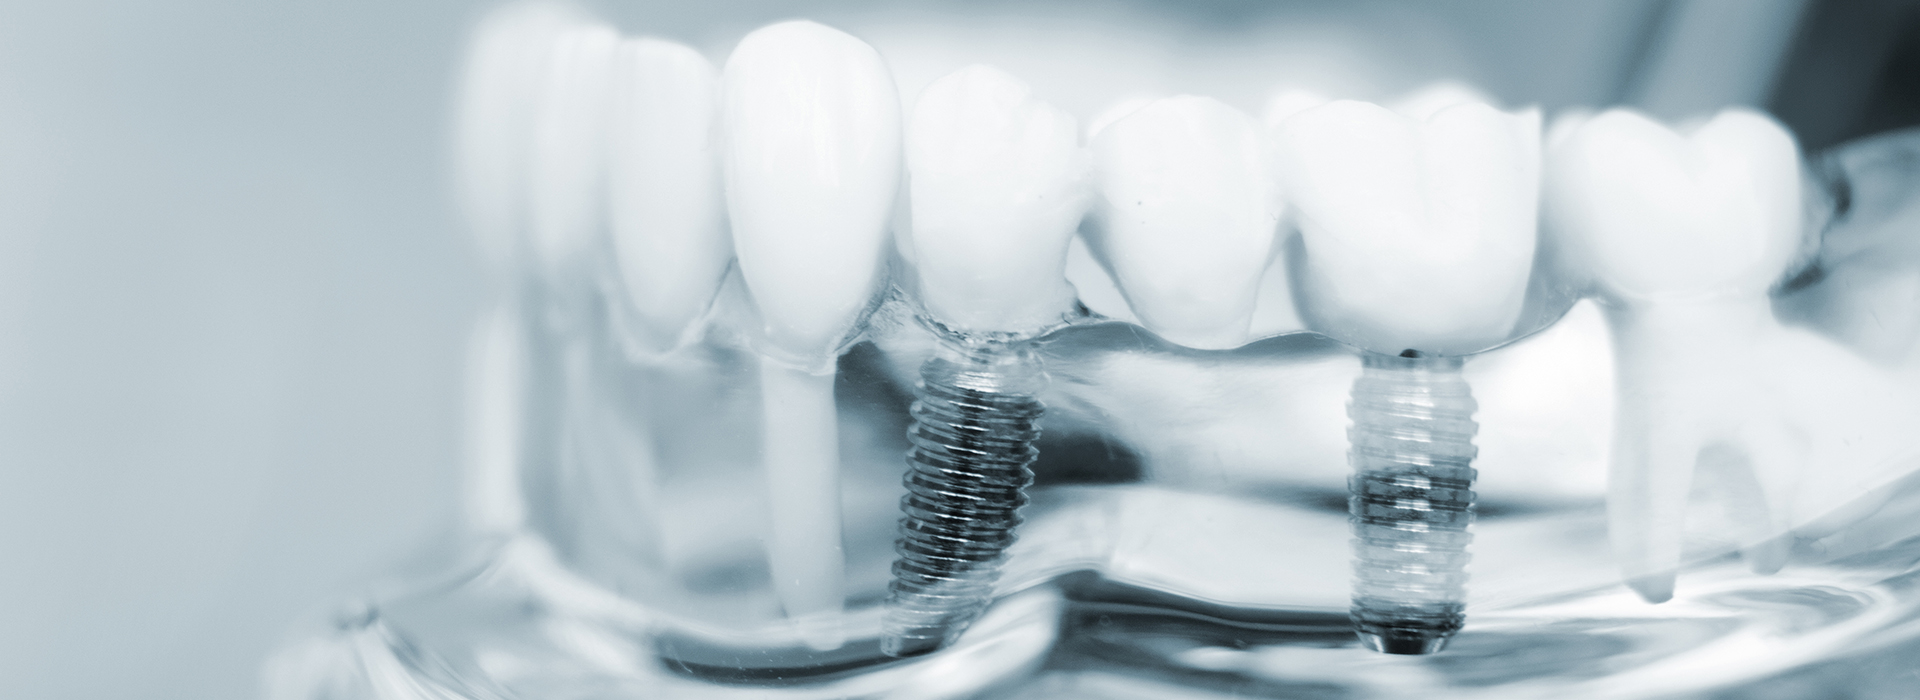 M. Derek Davis, DDS | Preventative Program, Root Canals and Implant Dentistry